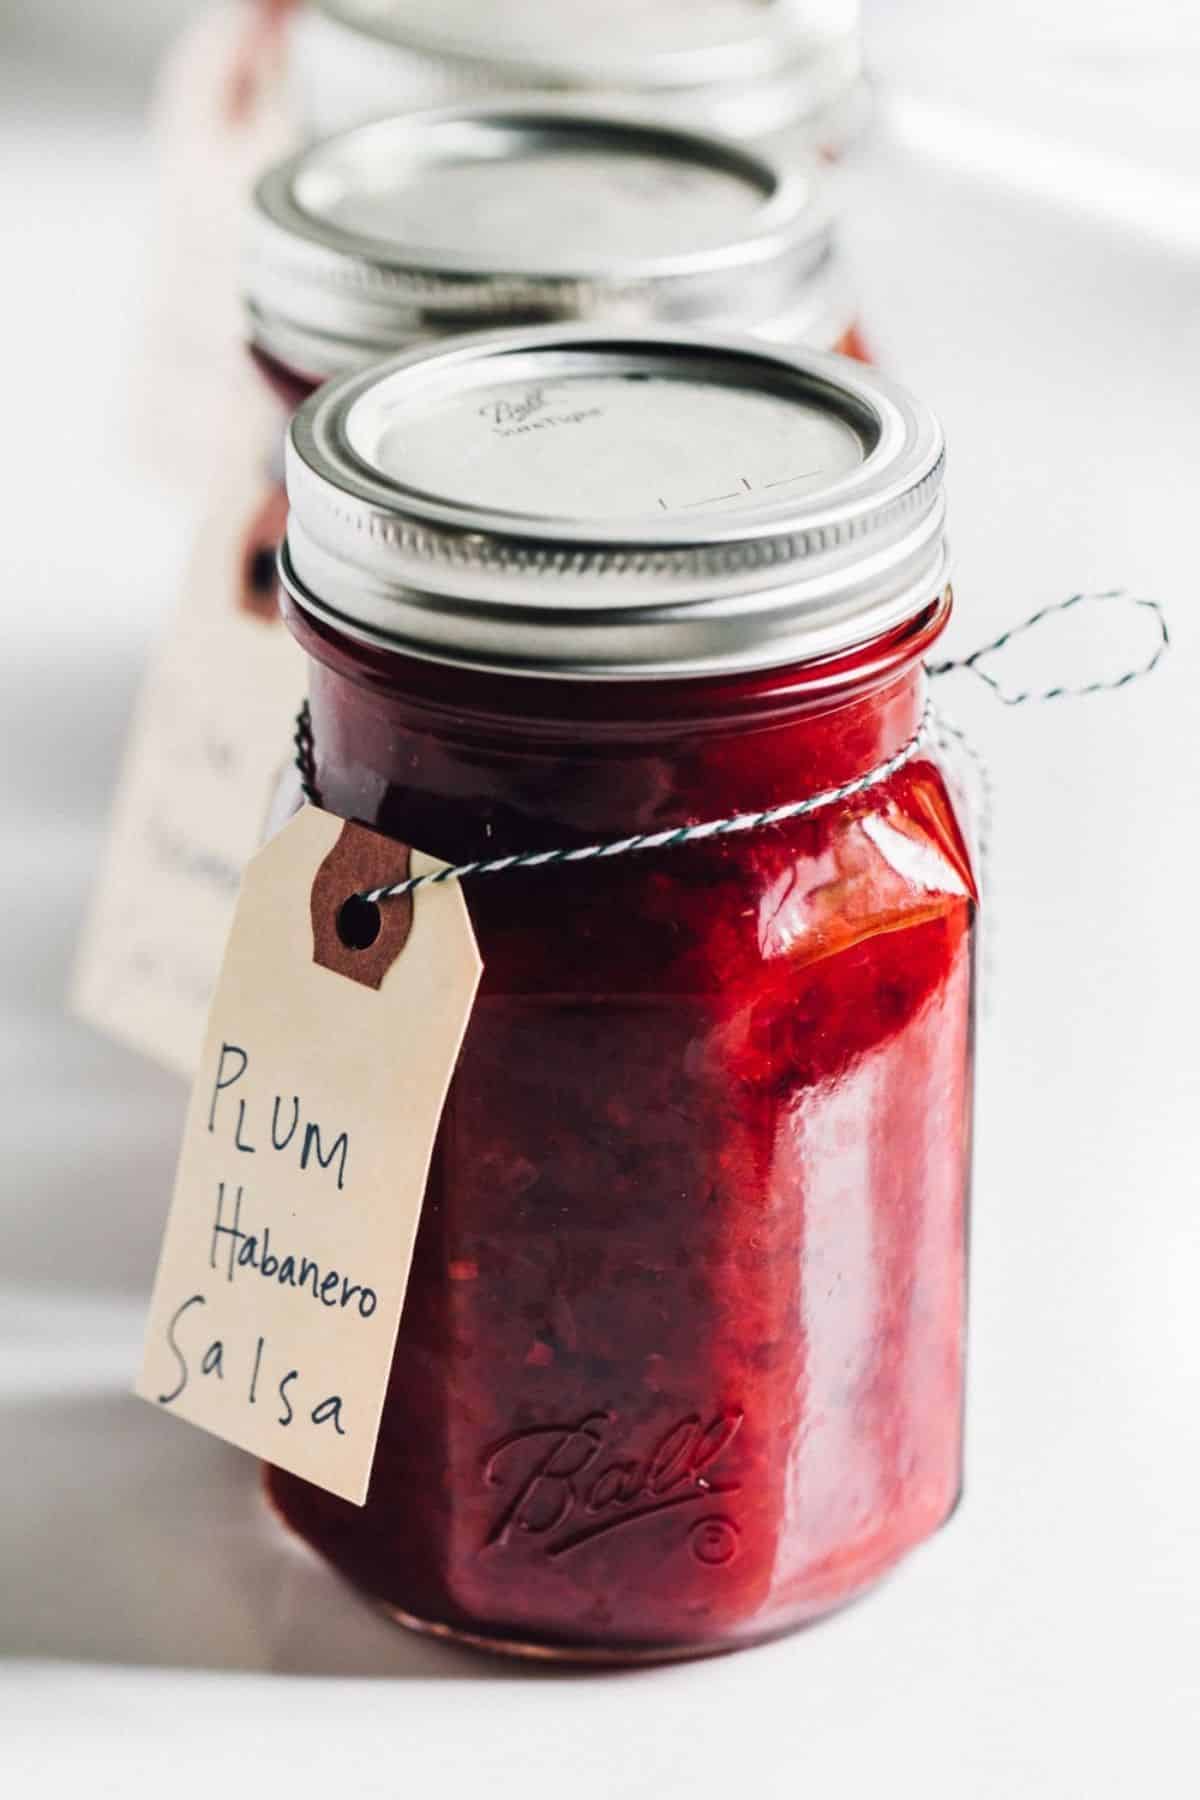 Plum habanero salsa in glass jars.